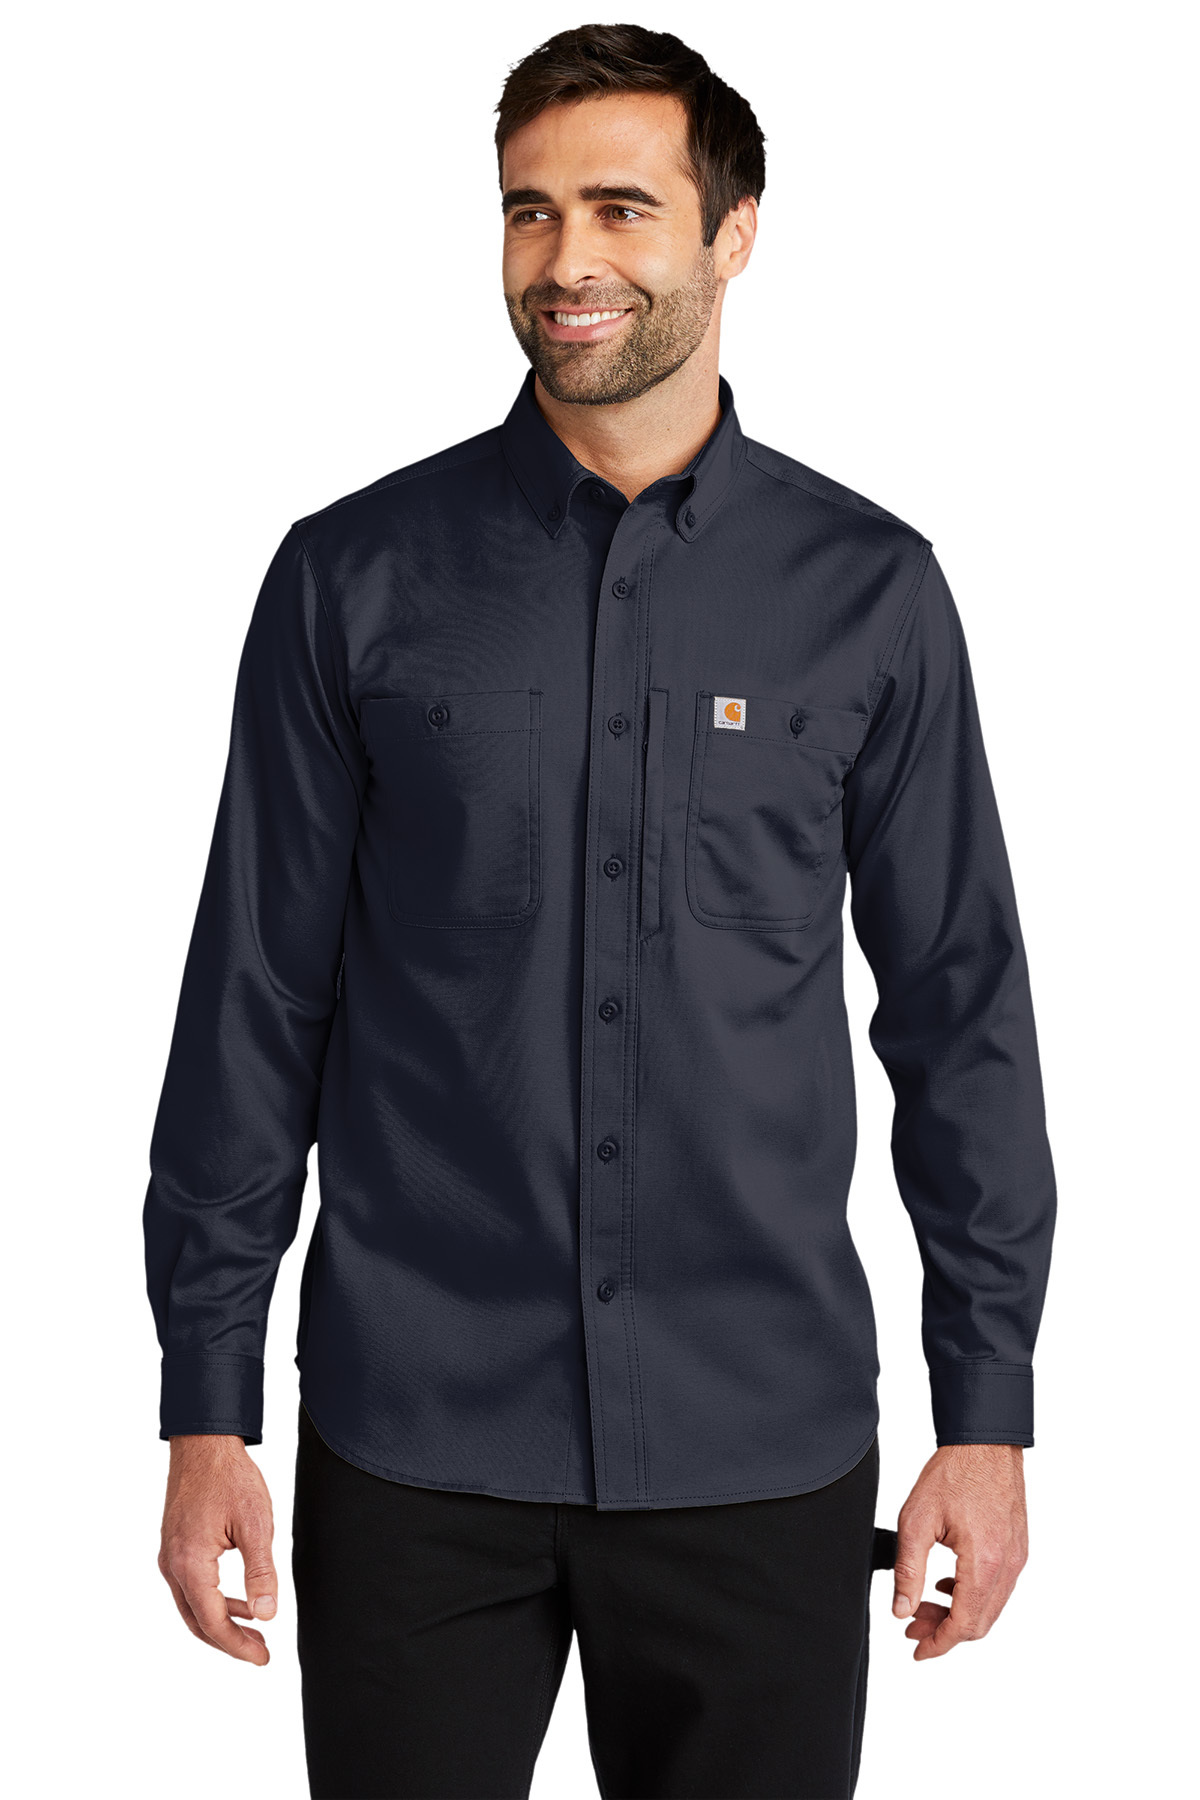 Carhartt Shirt Product Series SanMar | | Sleeve Professional Long Rugged